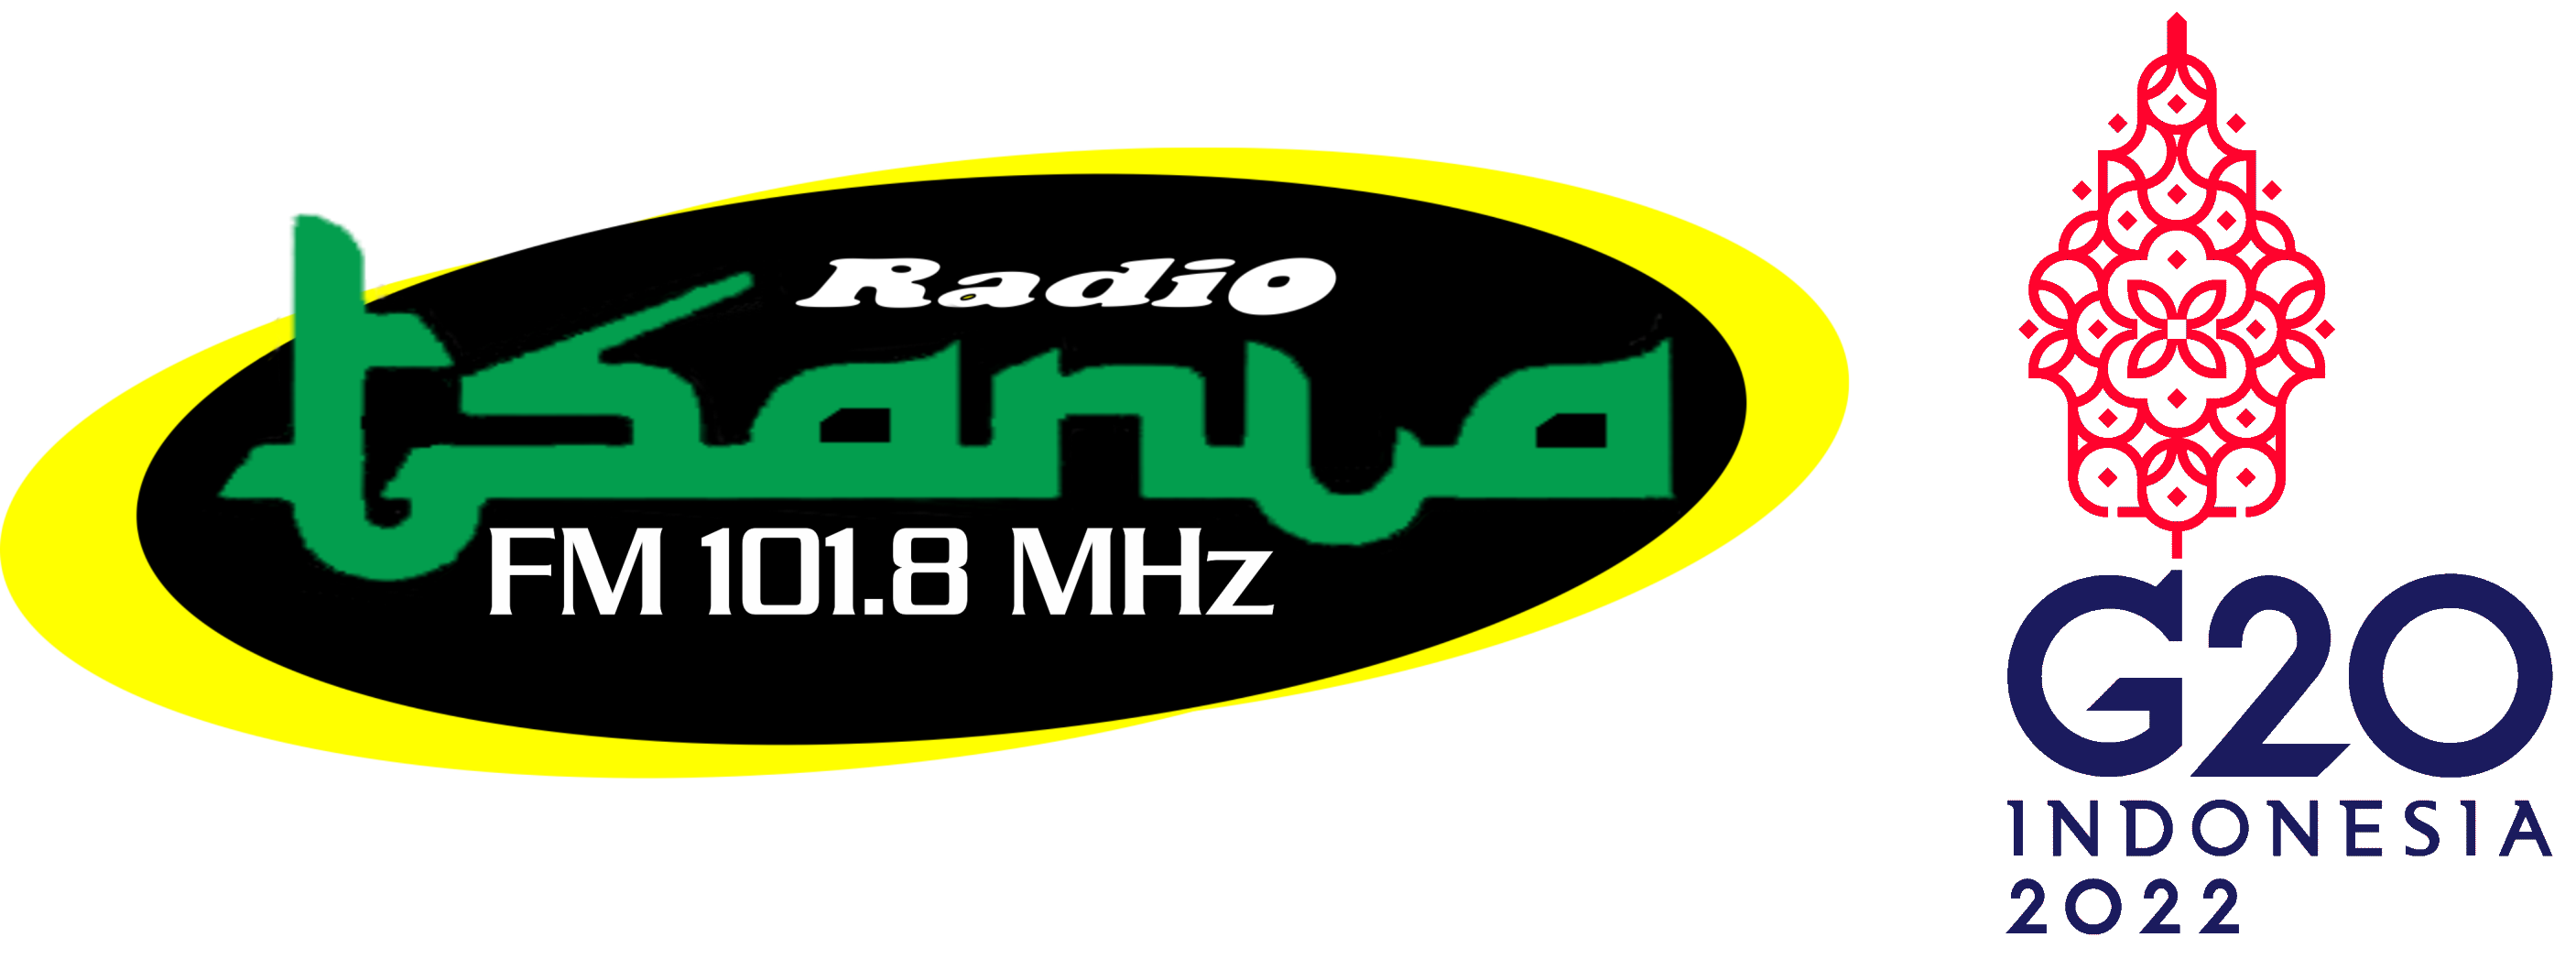 Radio Tsania FM 101.8 MHz